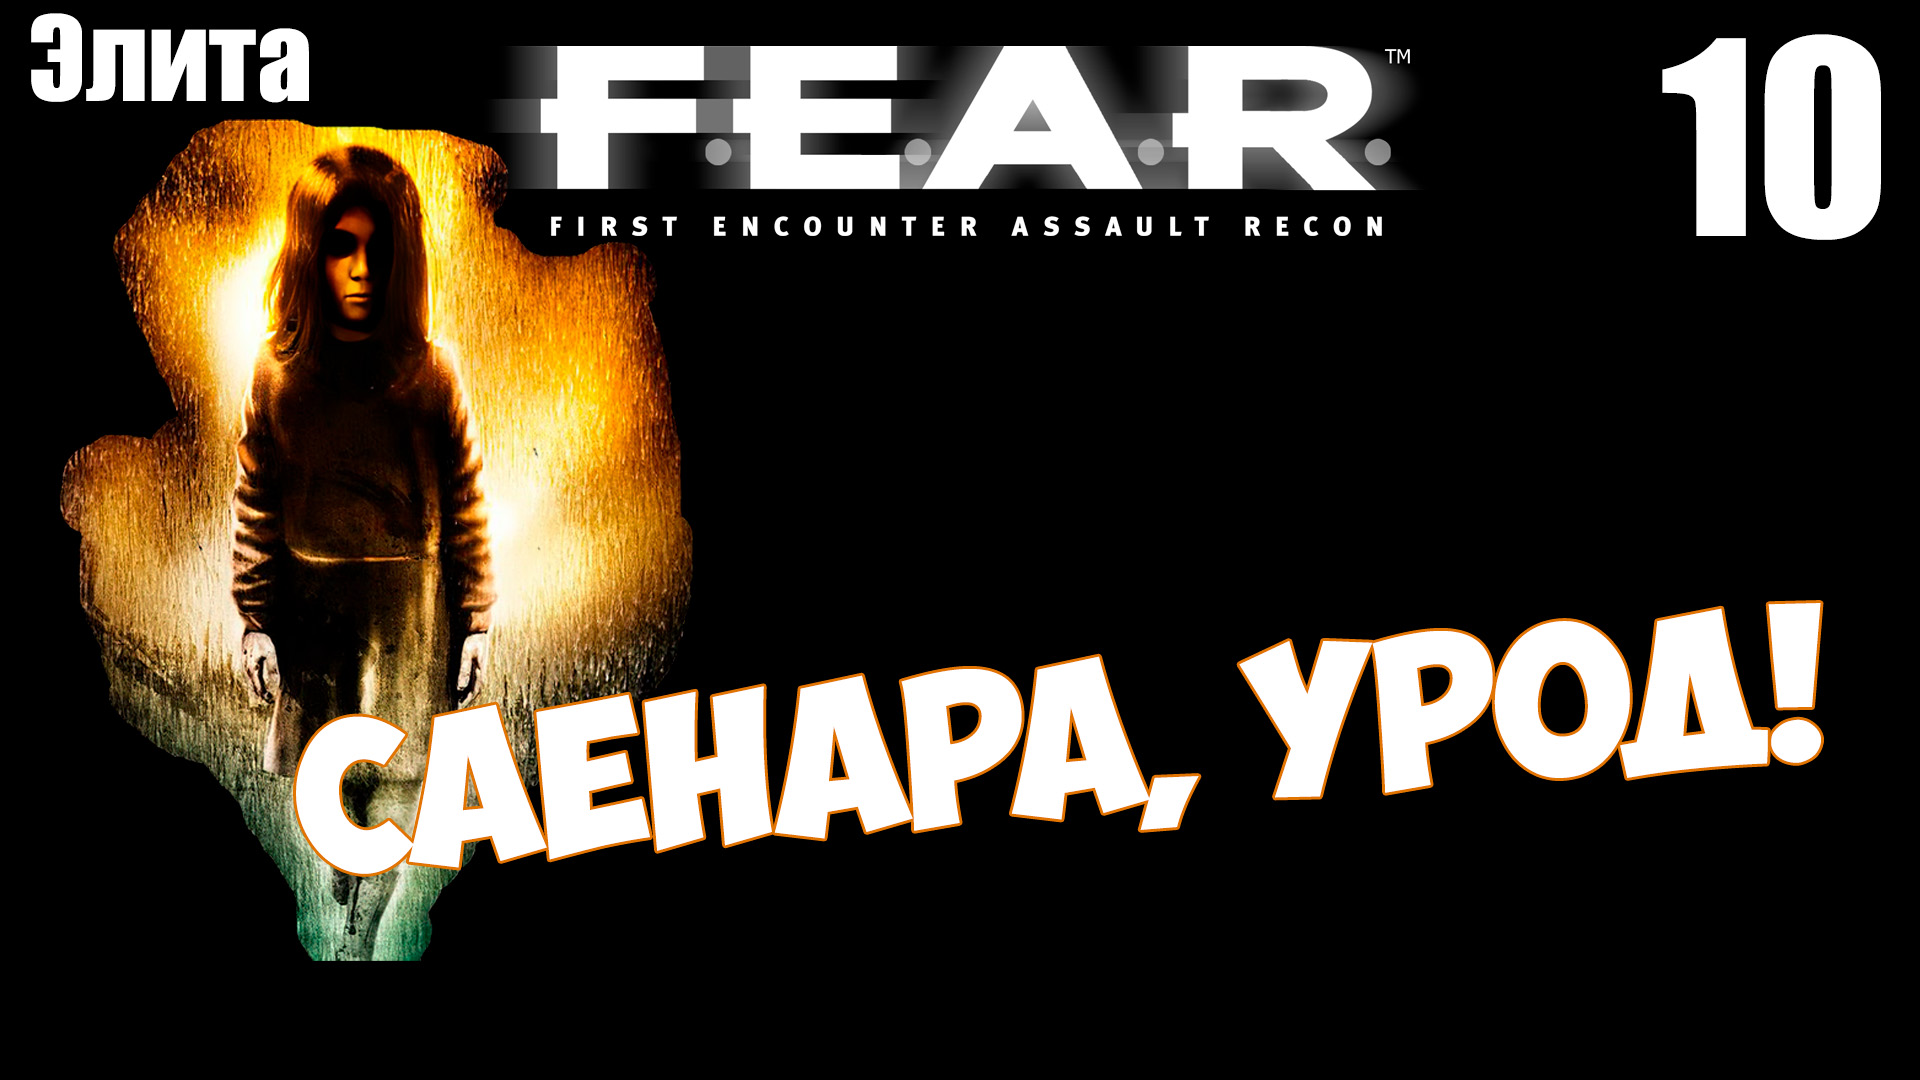 F.E.A.R. - Саёнара, урод. Прохождение хоррора #fear #shooter #horrorgaming